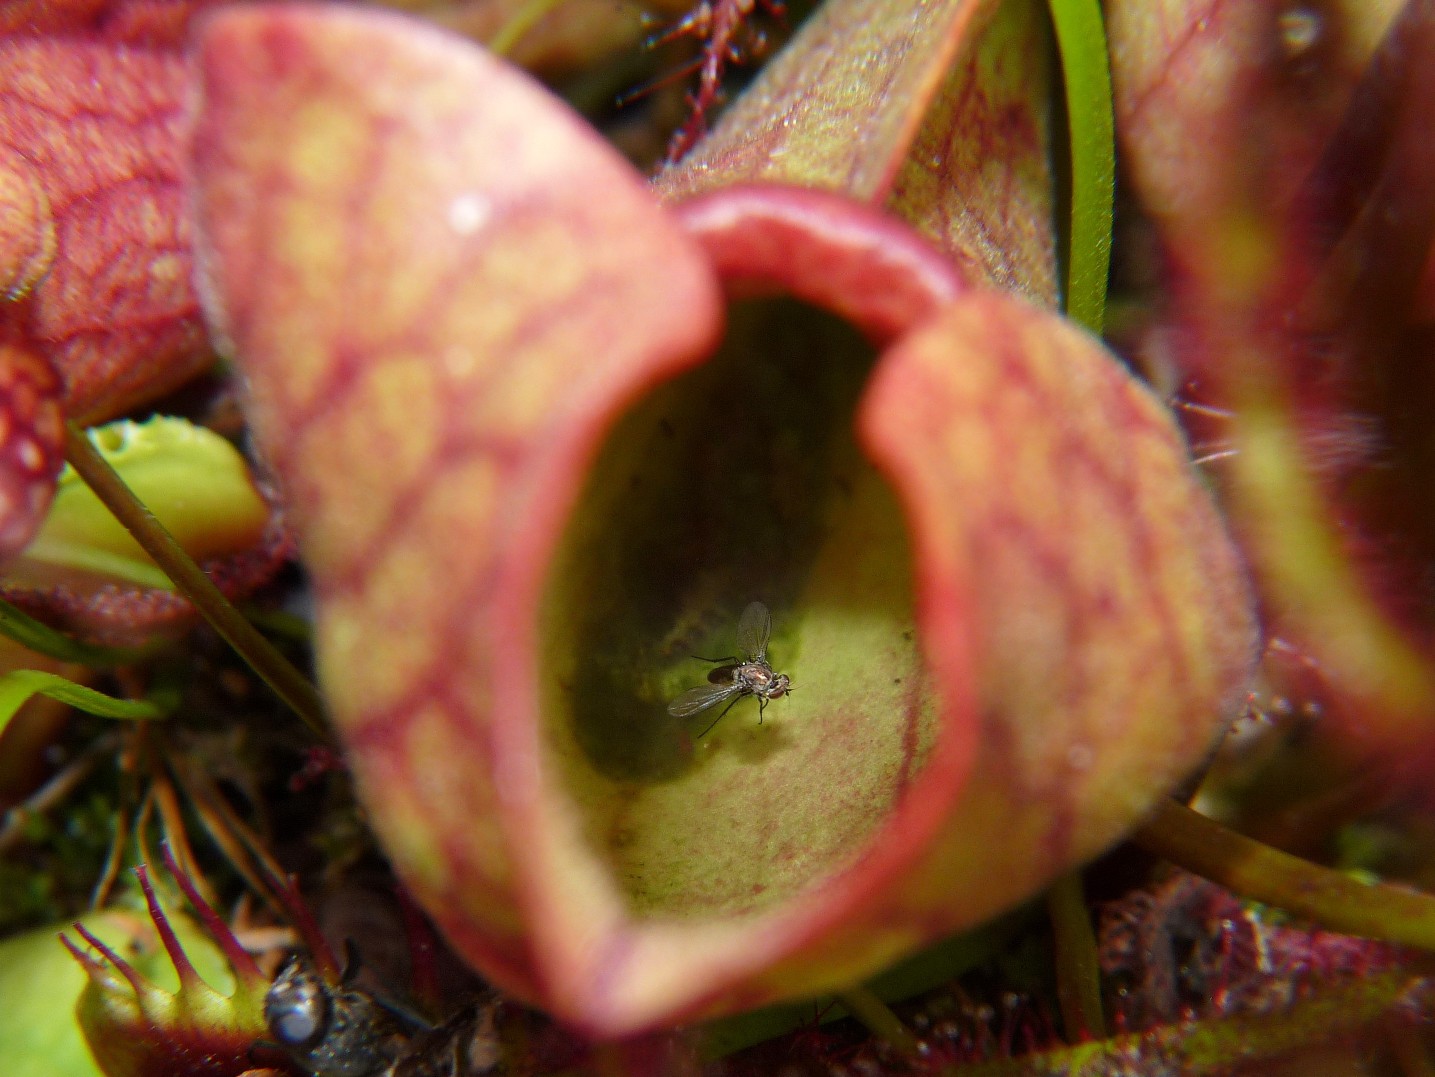 Donica na działce 2017 - Sarracenia purpurea z muchą na deser 2